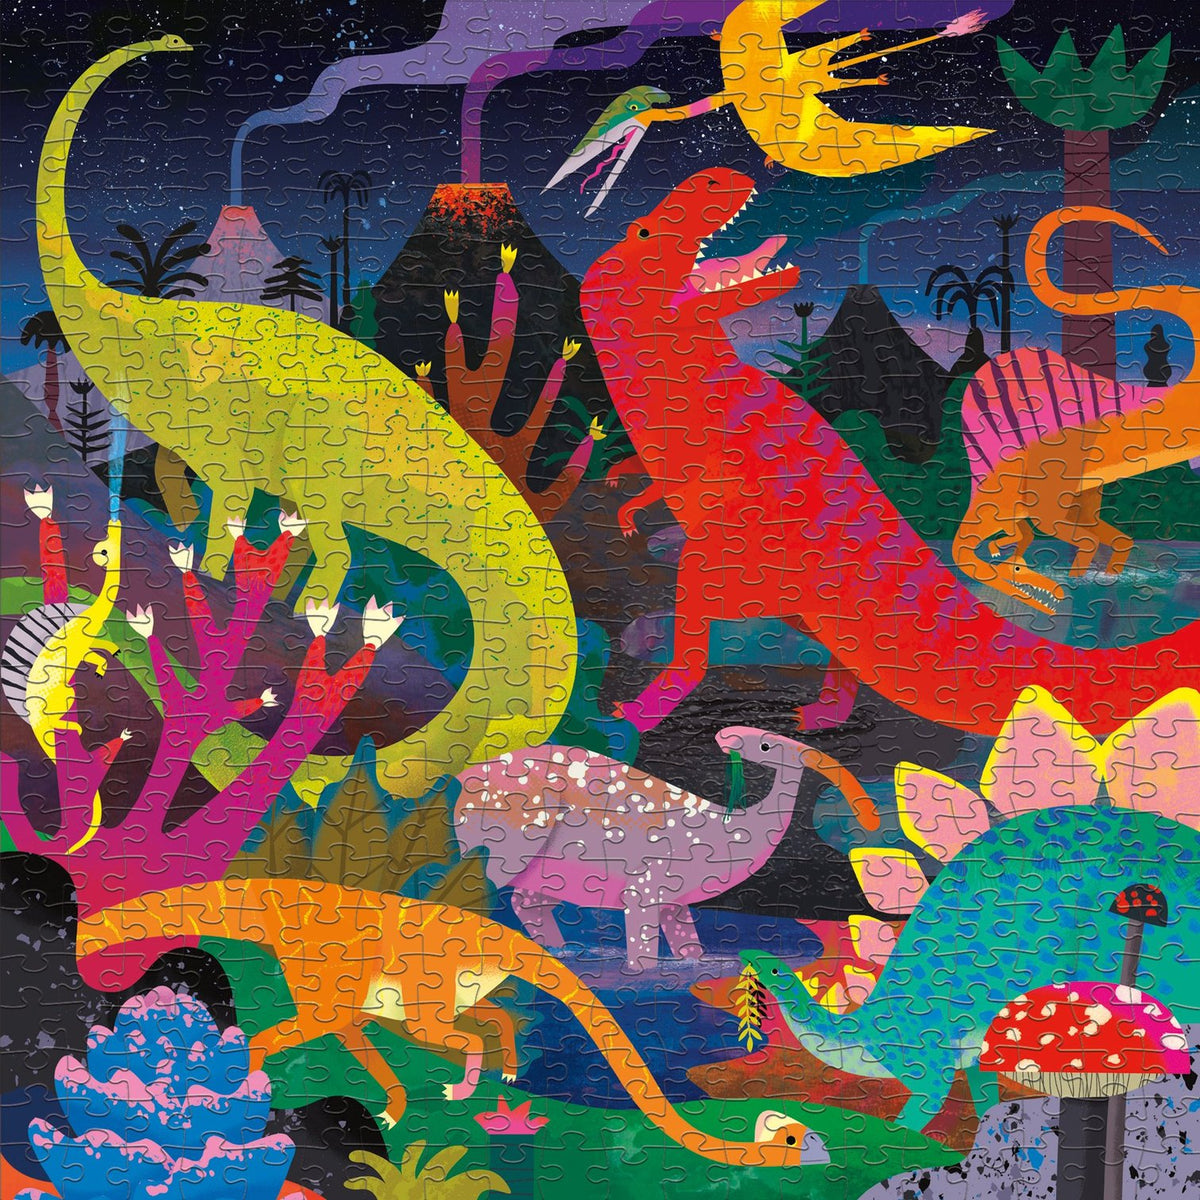 Glow in the Dark: Dinosaurs Illuminated 500 Piece Puzzle - Quick Ship